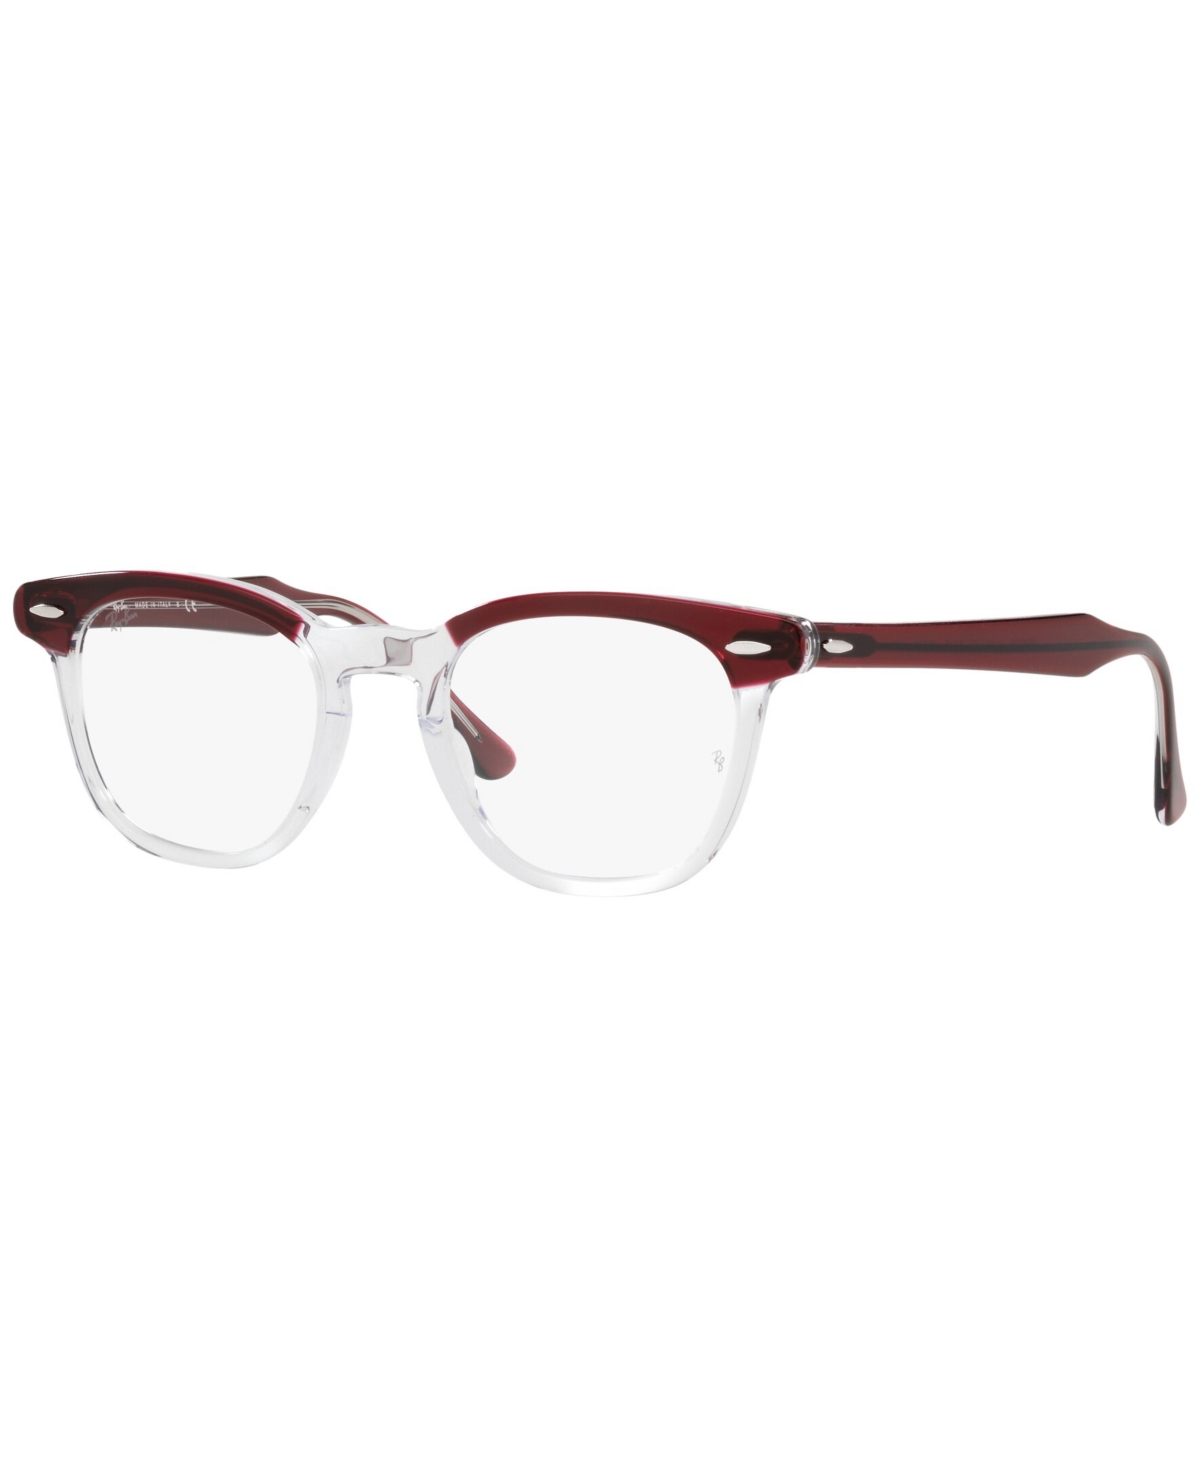 RB5398 Hawkeye Unisex Square Eyeglasses - Bordeaux on Transparent